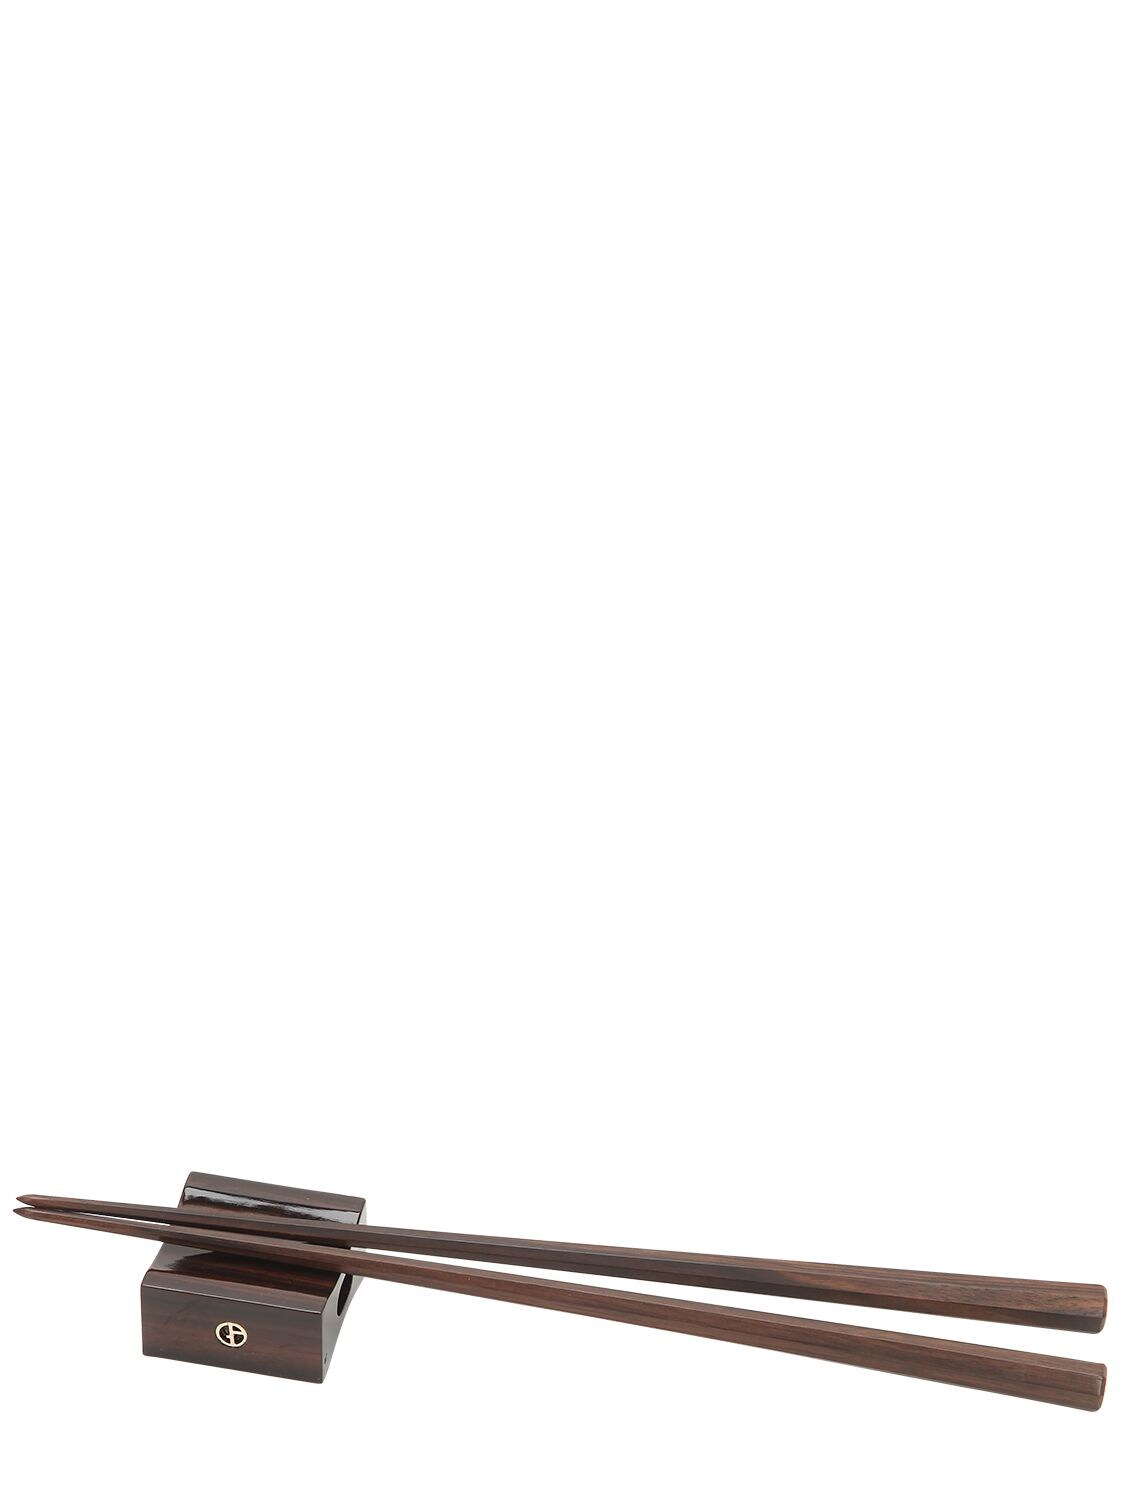 Armani/casa Naike Wooden Chopsticks & Holder In Black